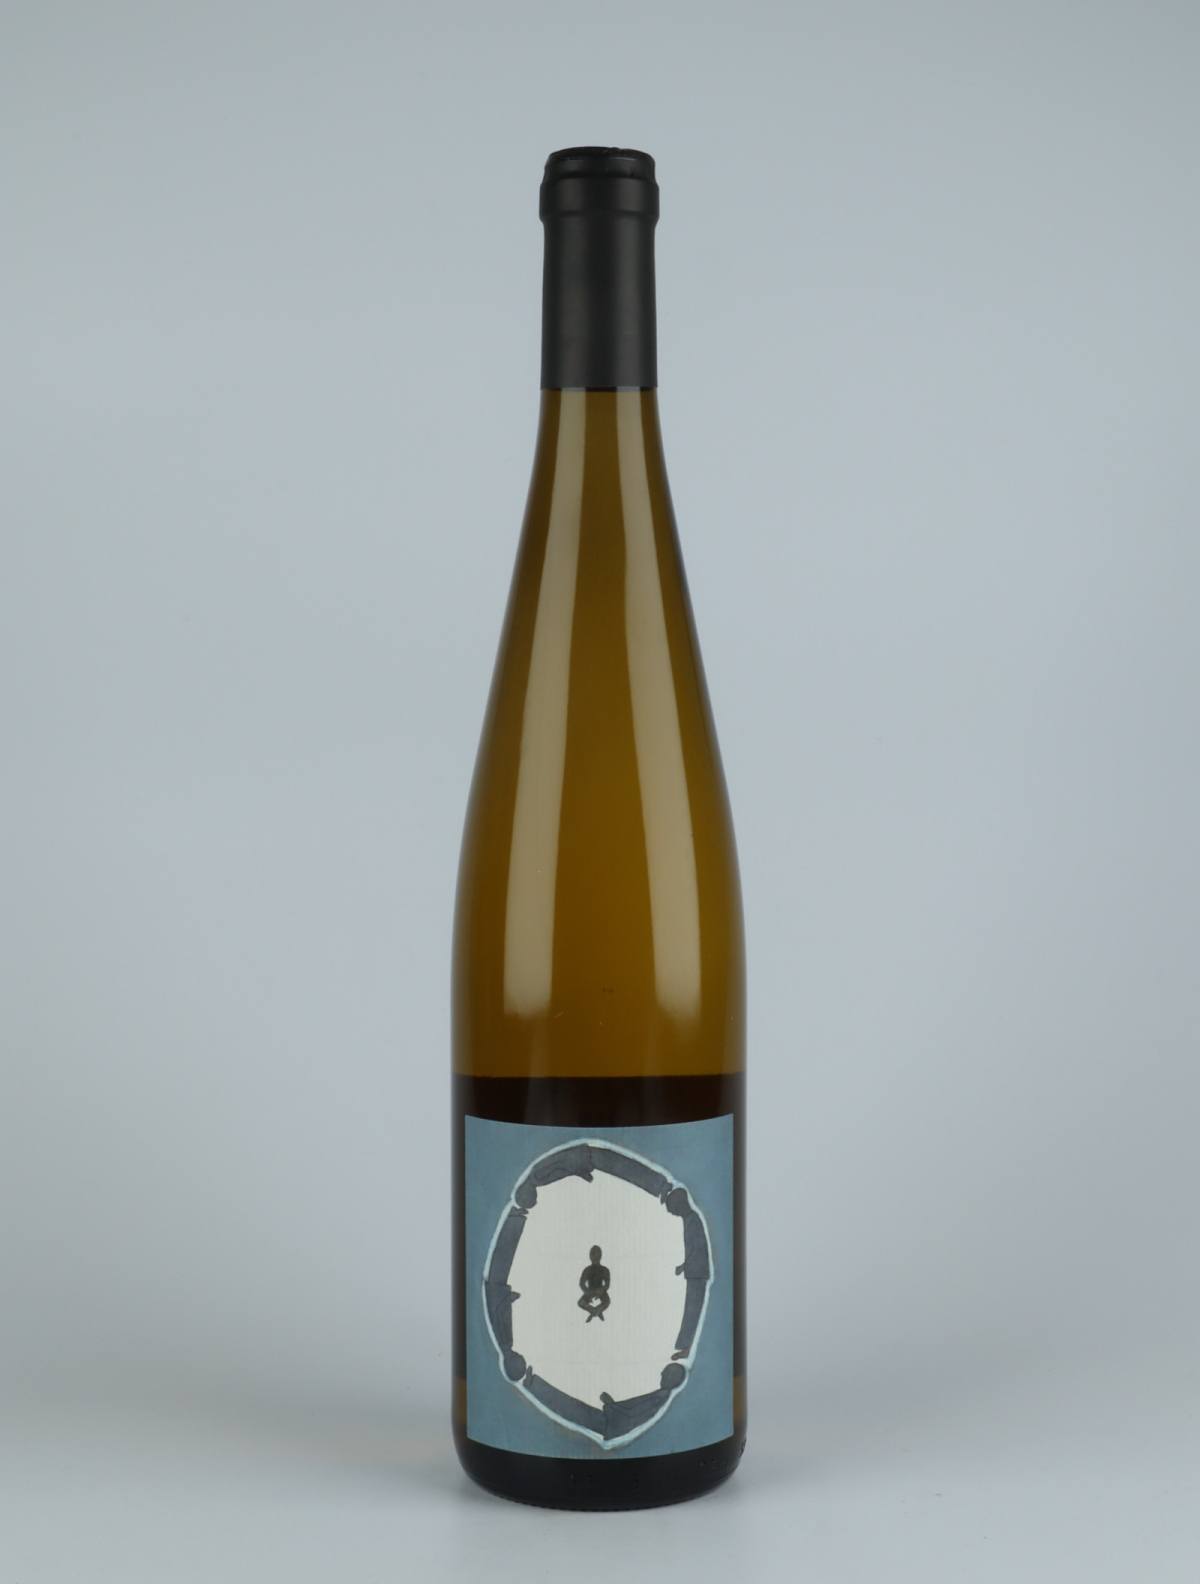 A bottle 2018 Quelqu'un Orange wine from Domaine Rietsch, Alsace in France